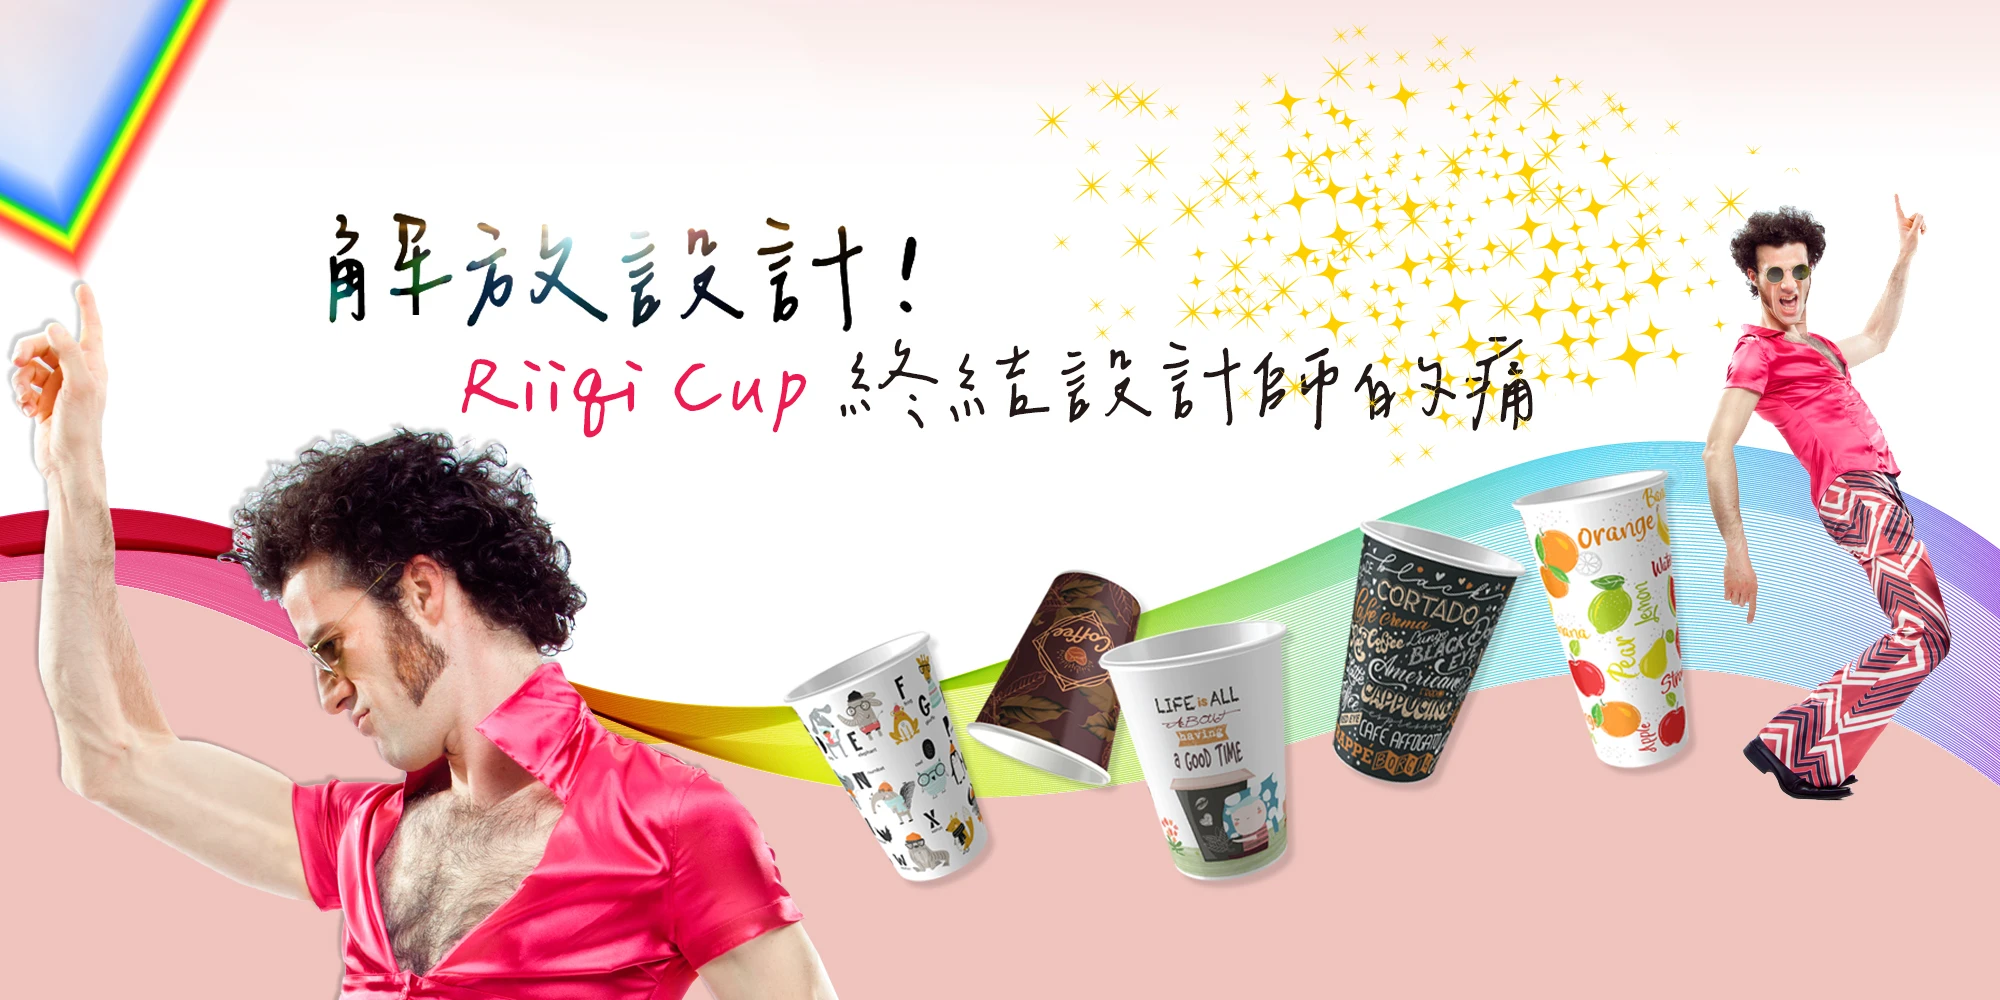  | Riiqi Cup 線上訂製網